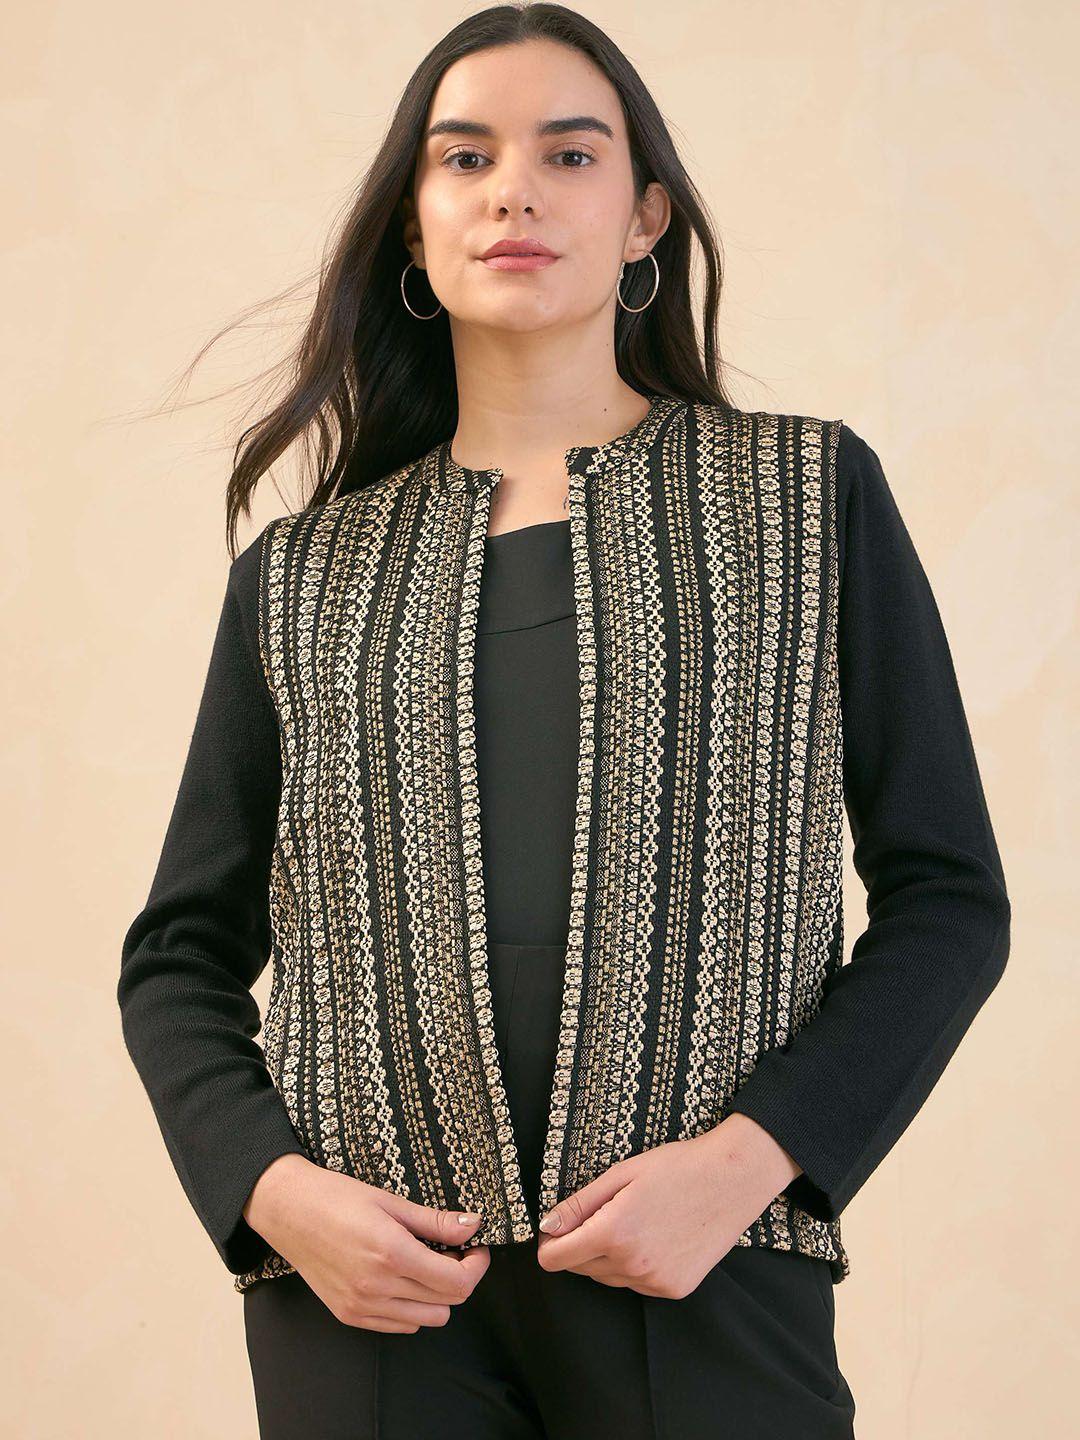 salt attire women black gold-toned acrylic open front jacket